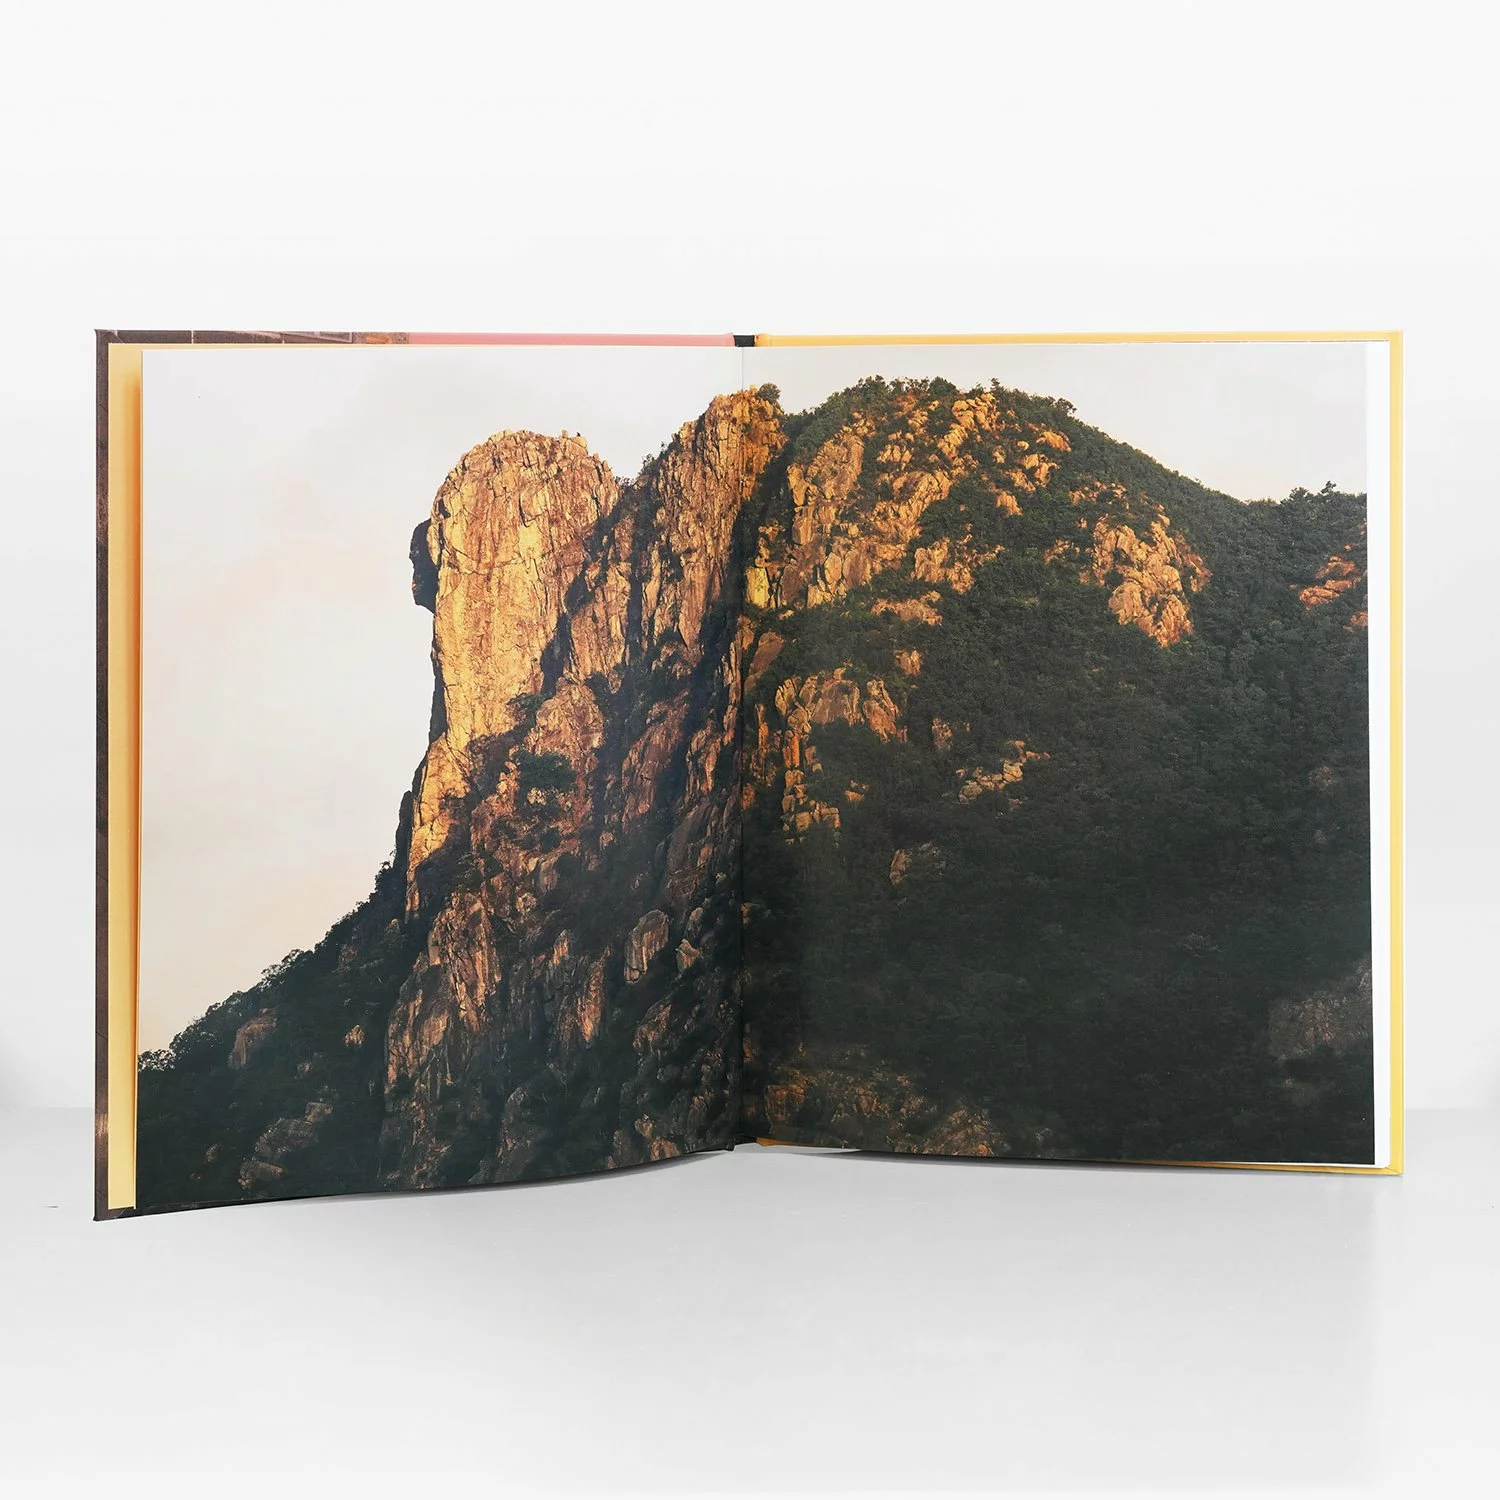 Thirty six Views of Lion RockInside 1 - 36 Views Of Lion Rock - Book |  - 36 Views Of Lion Rock 獅子山三十六景 - Romain Jacquet-Lagréze